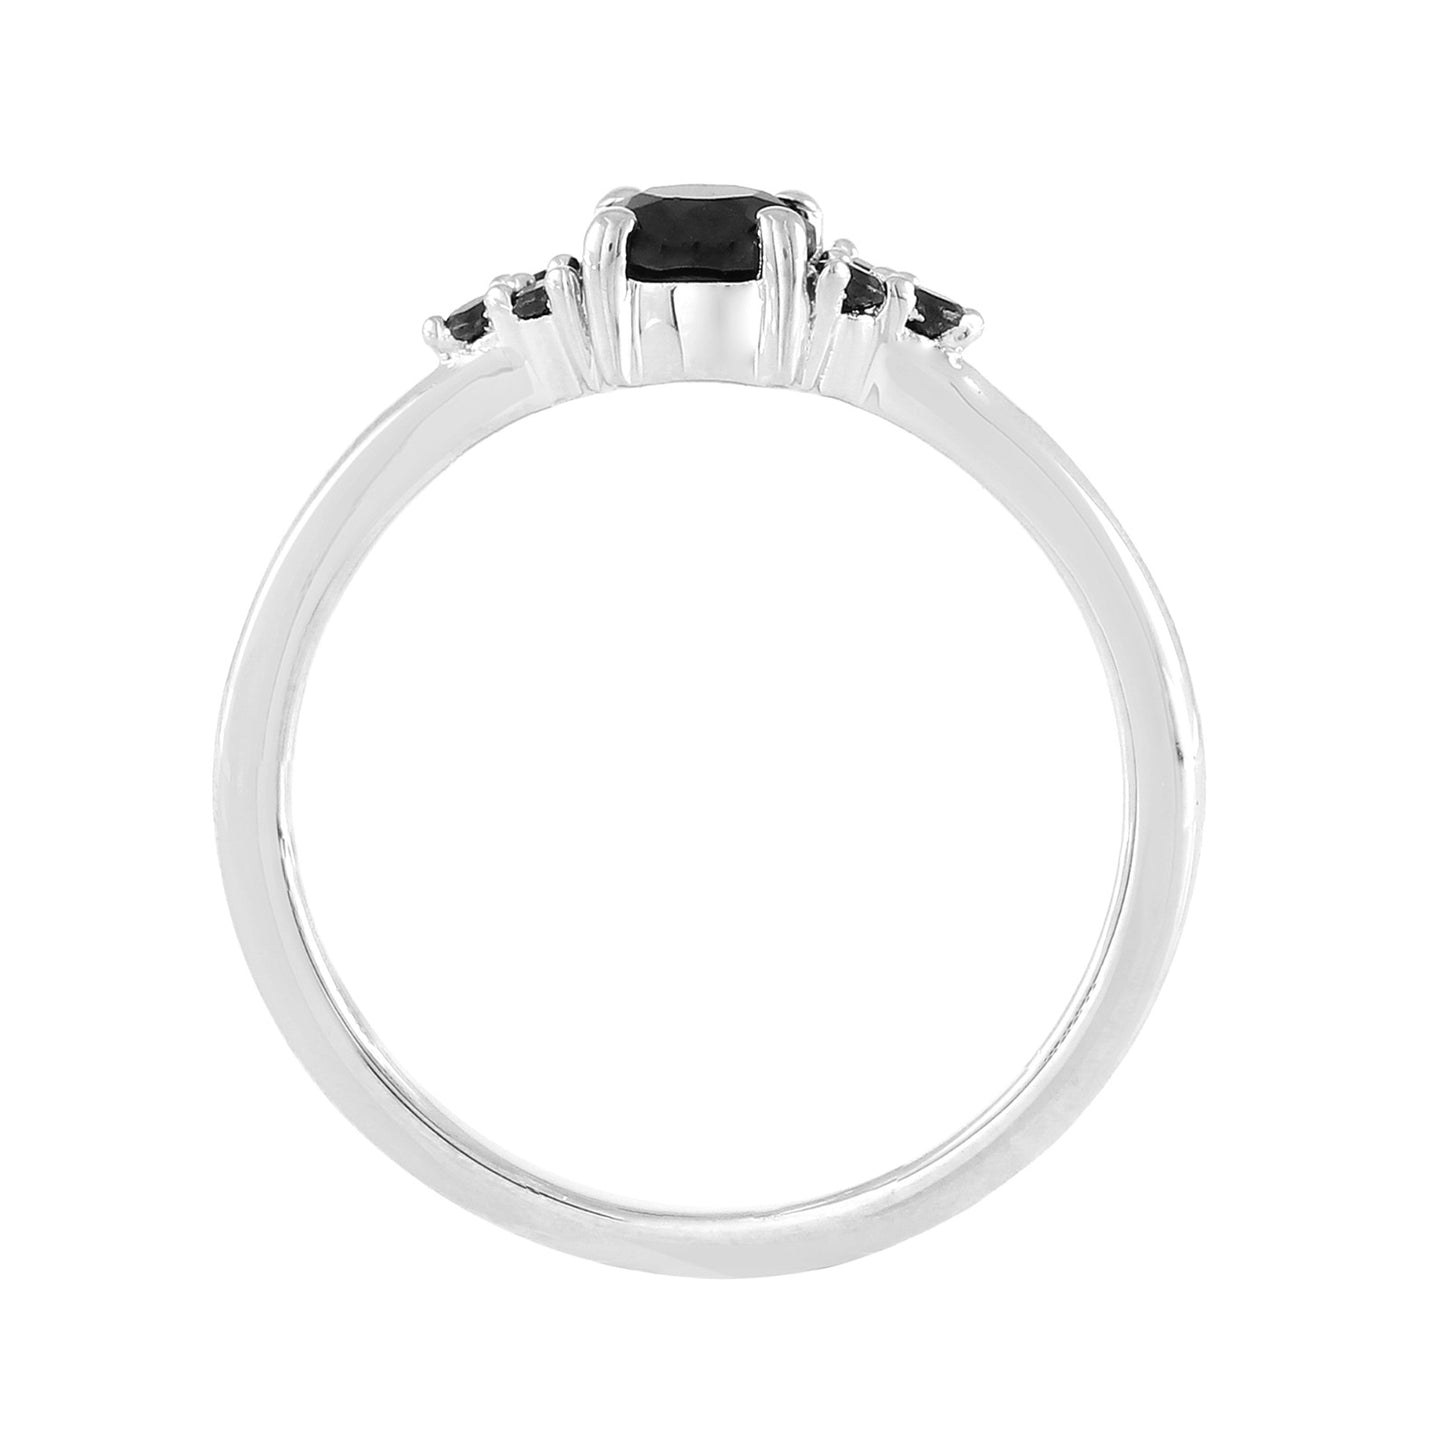 Cluster Black Spinel Ring - Silver